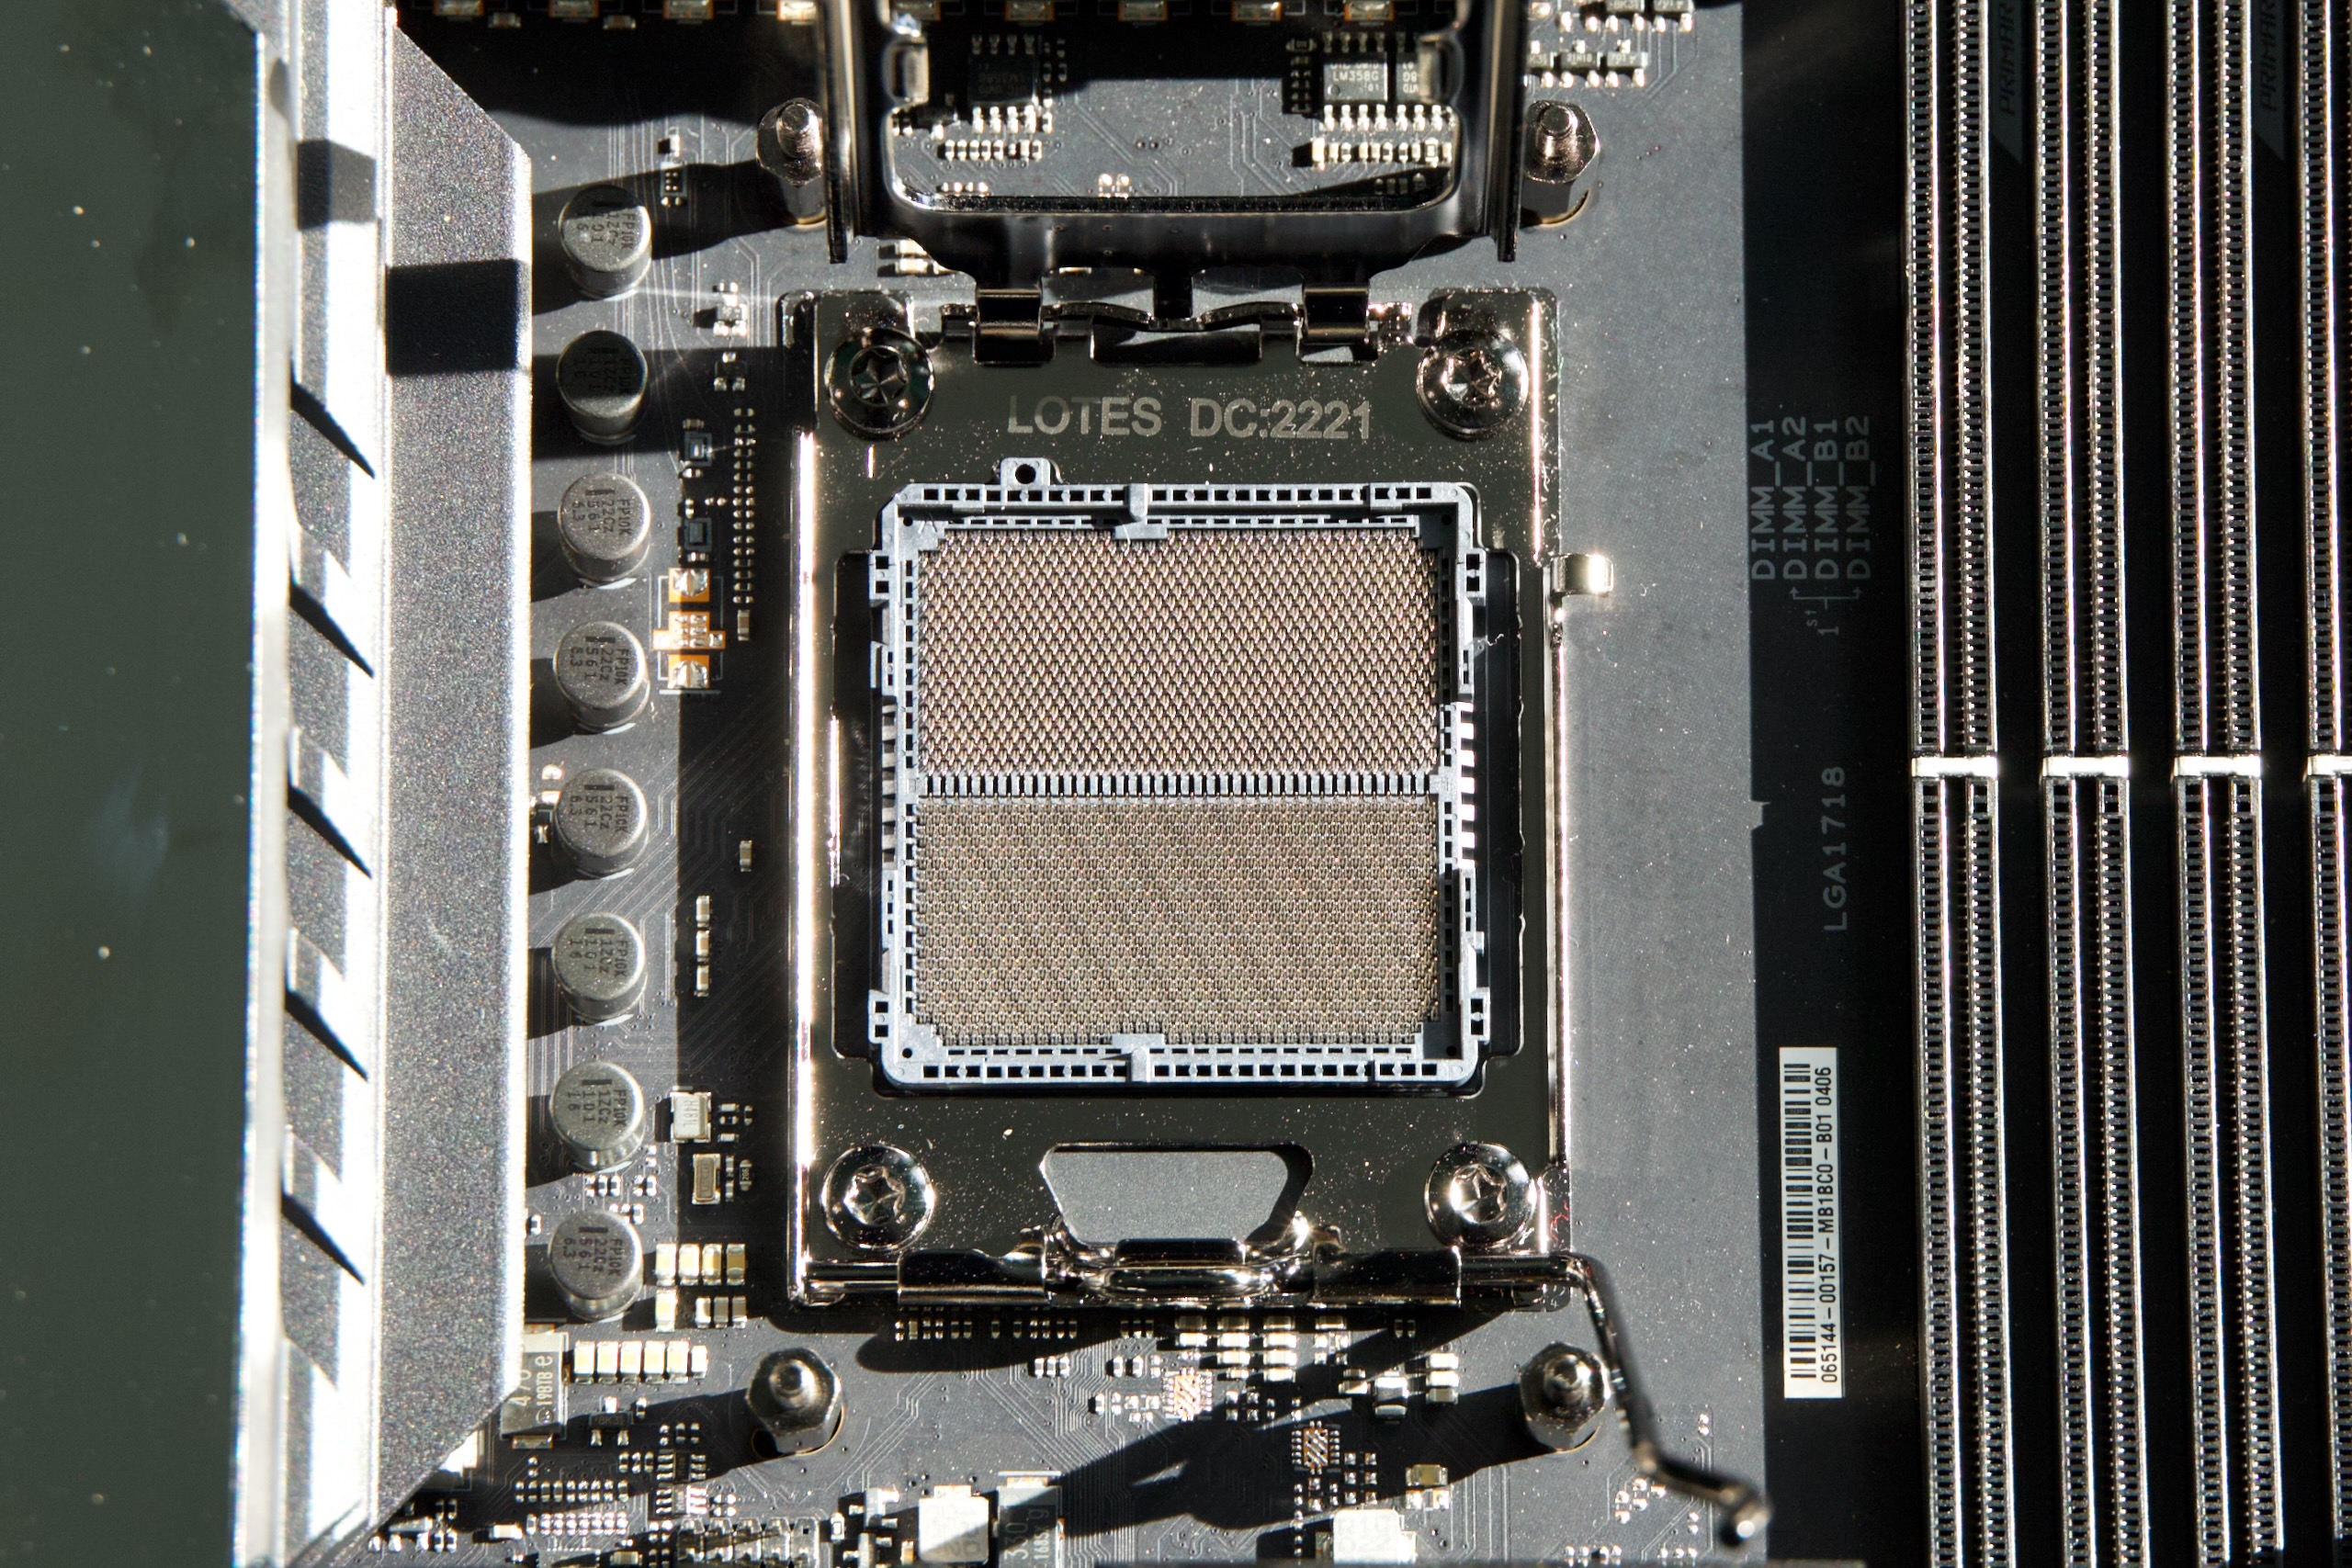 Chipset AMD Socket AM5